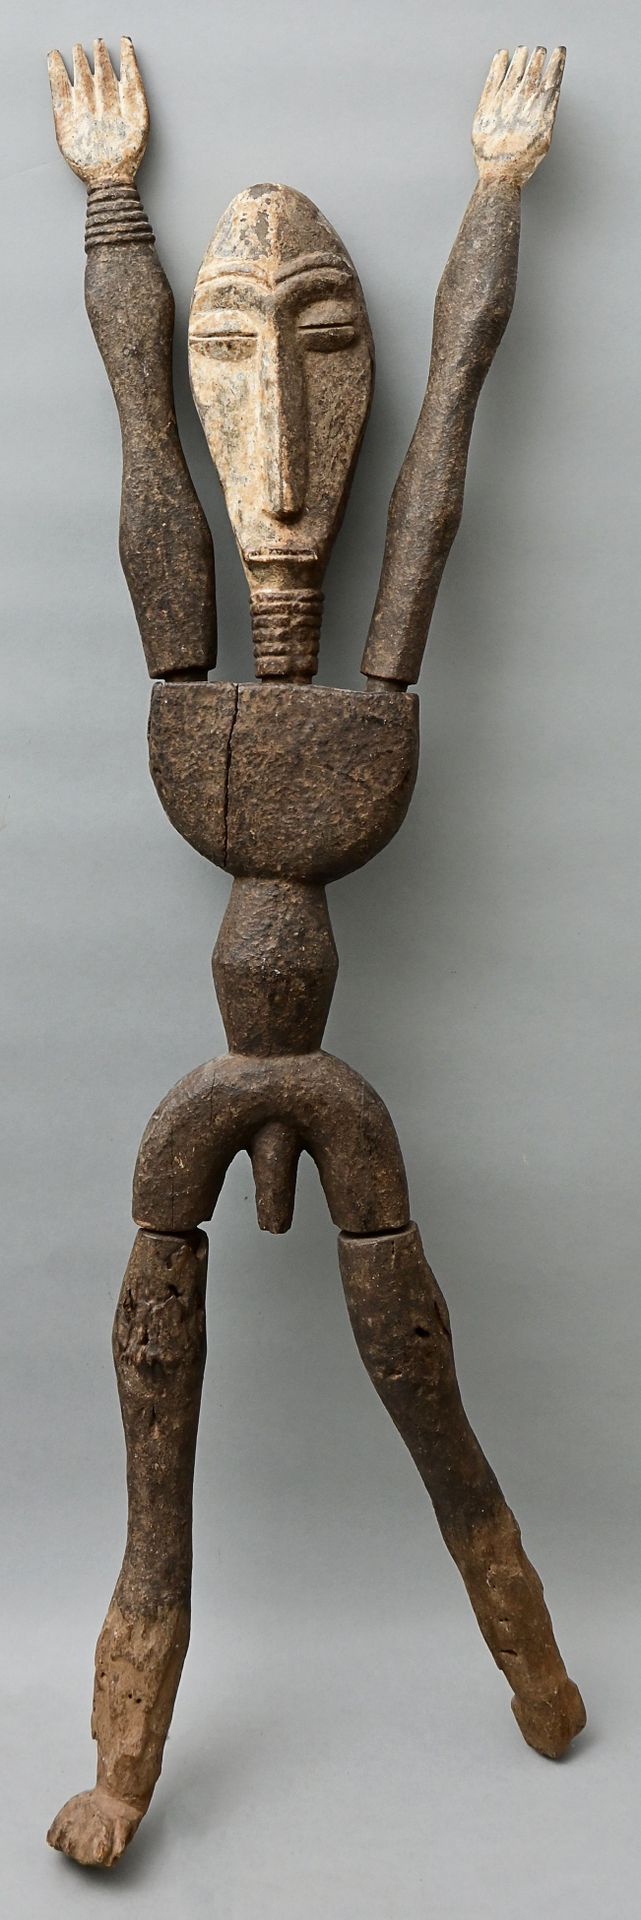 Null Statuette ubanga nyama, Kongo, Legola-Art Holz, geschnitzt, anthropomorphe &hellip;